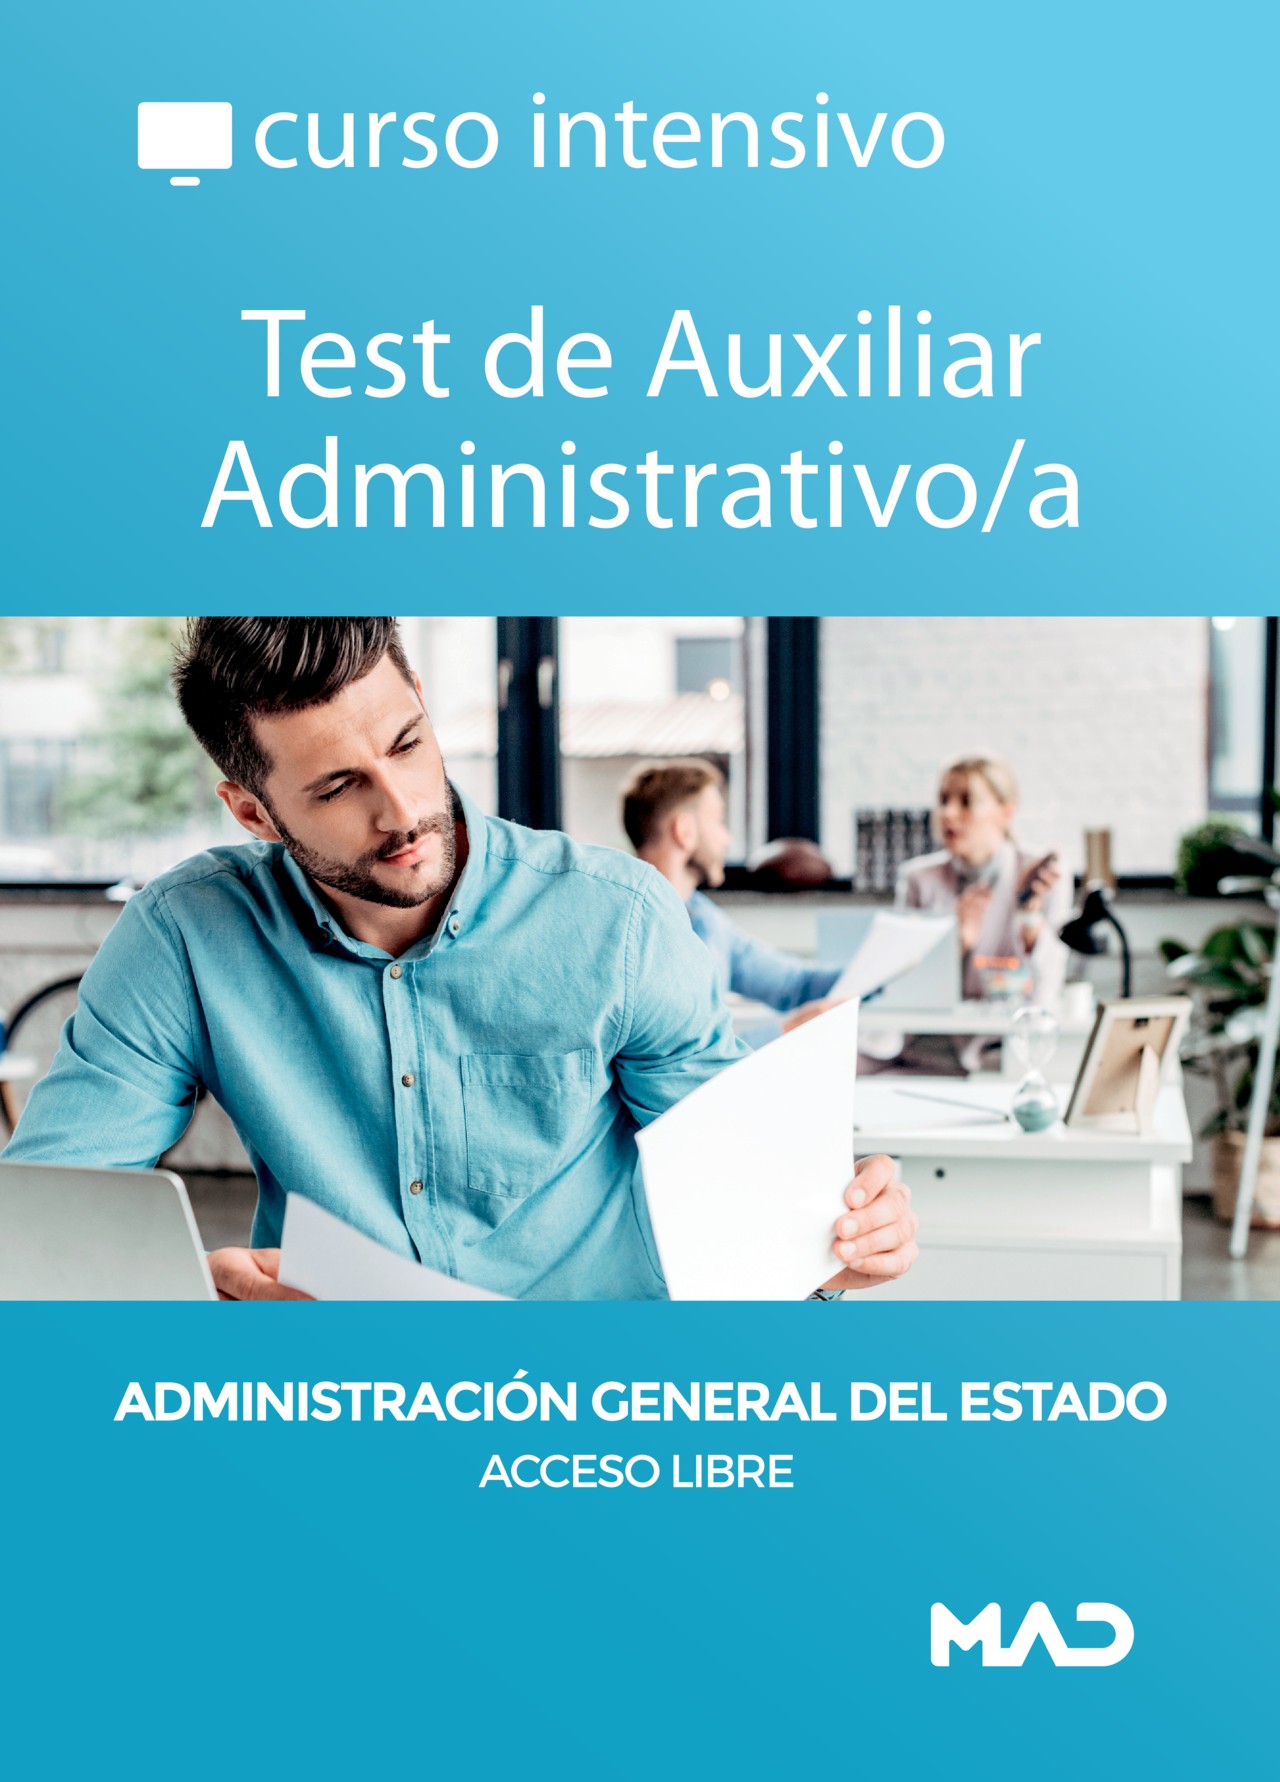 otro paso Detener Curso intensivo Test online Auxiliar Administrativo/a (acceso libre) Estado